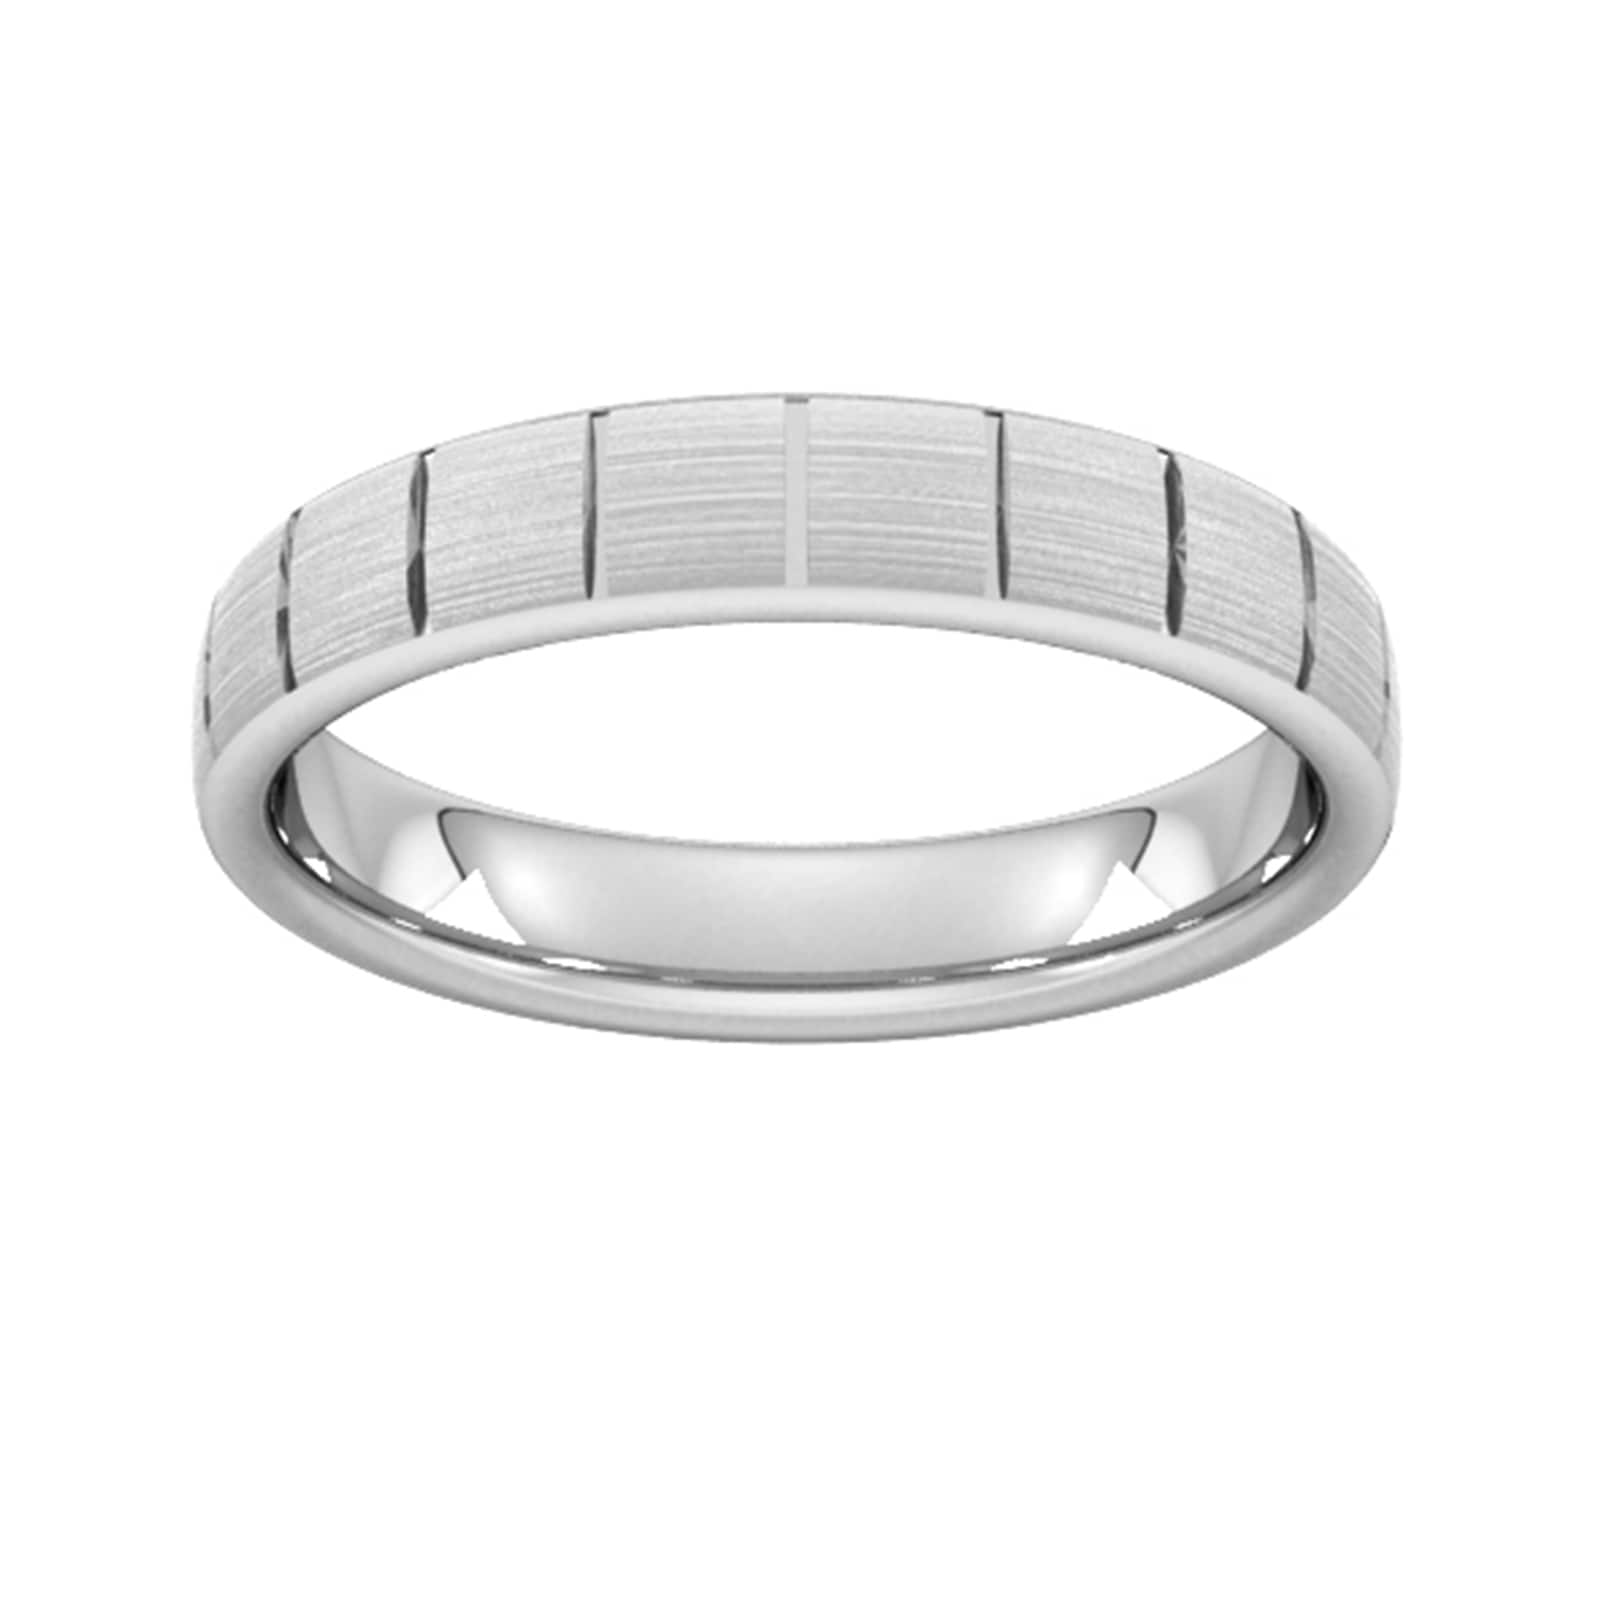 4mm Slight Court Standard Vertical Lines Wedding Ring In 950 Palladium - Ring Size N